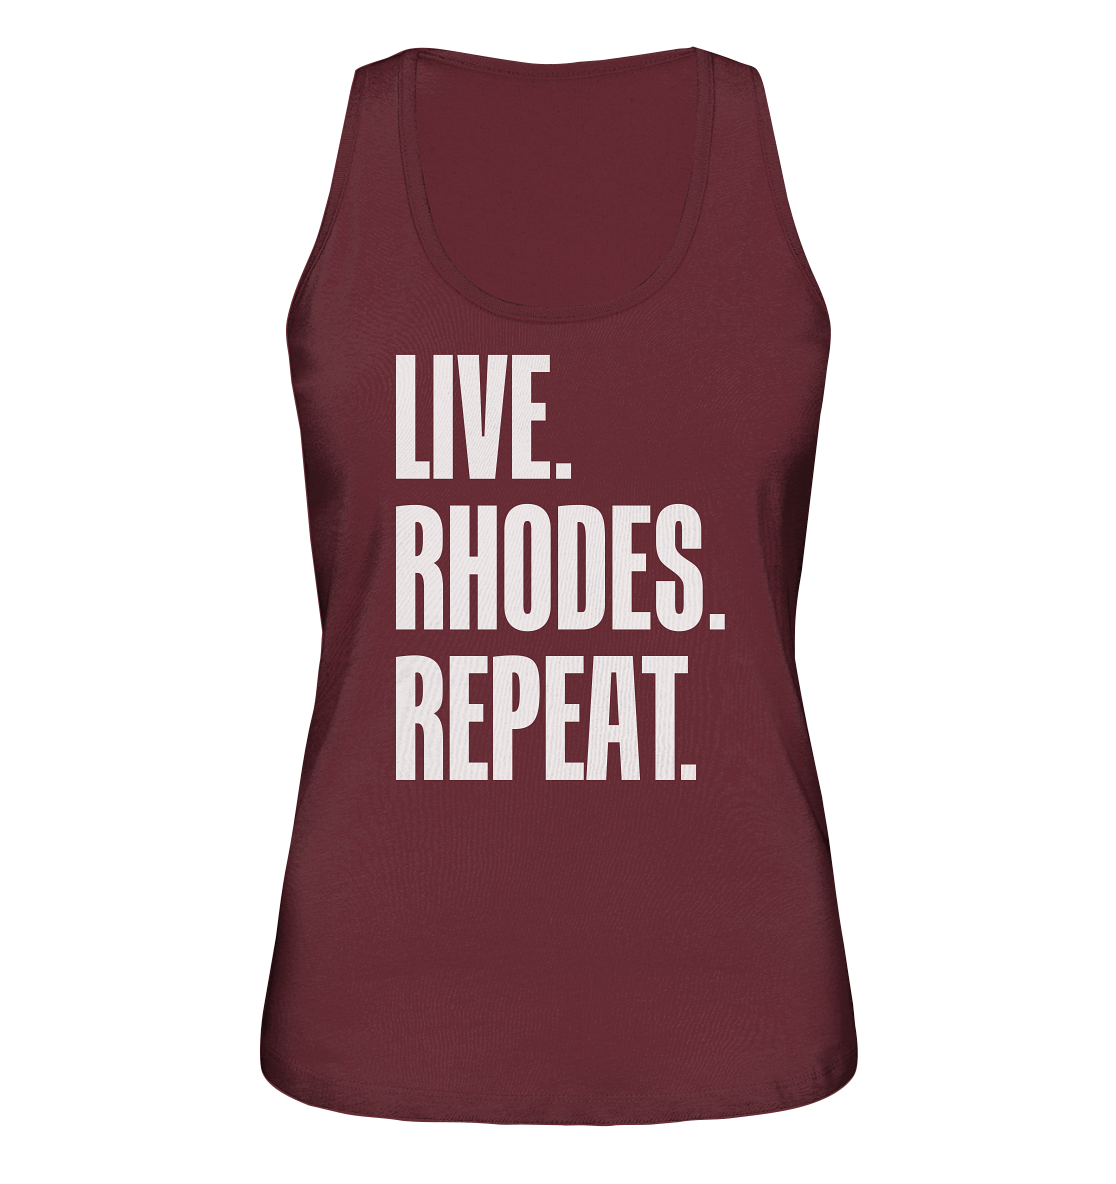 LIVE. RHODES. REPEAT. - Ladies organic tank top